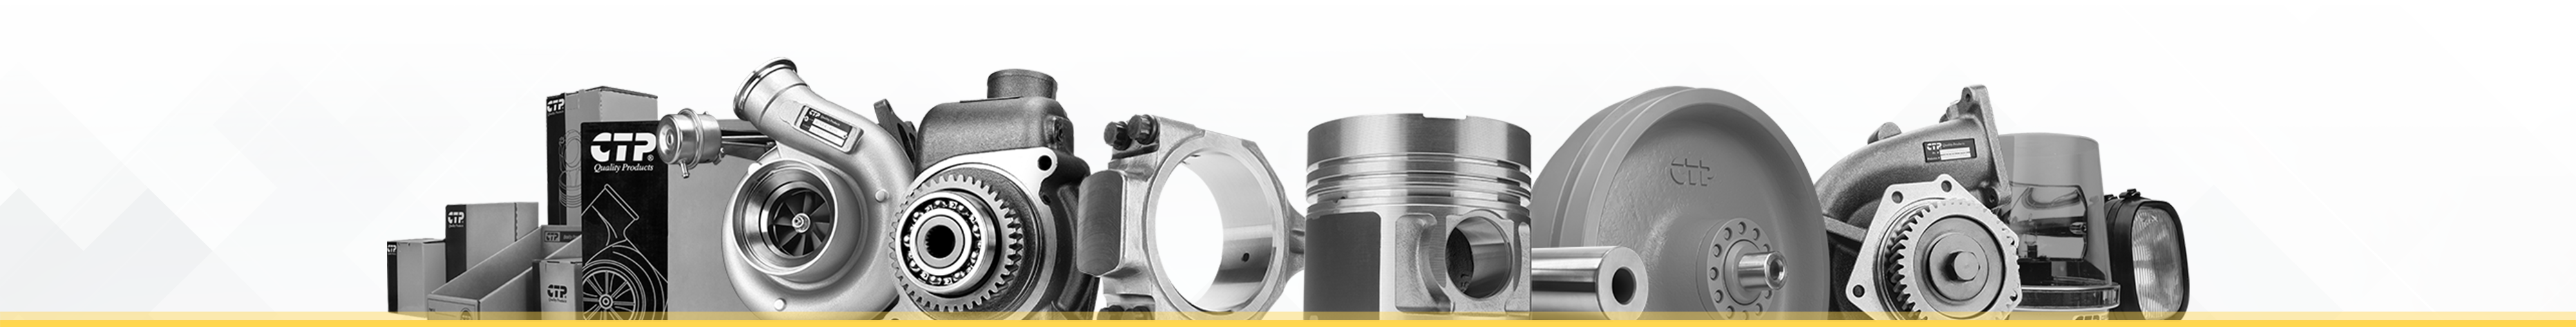 Footer parts costex 2 | hydraulic cylinder service kits for komatsu® john deere®